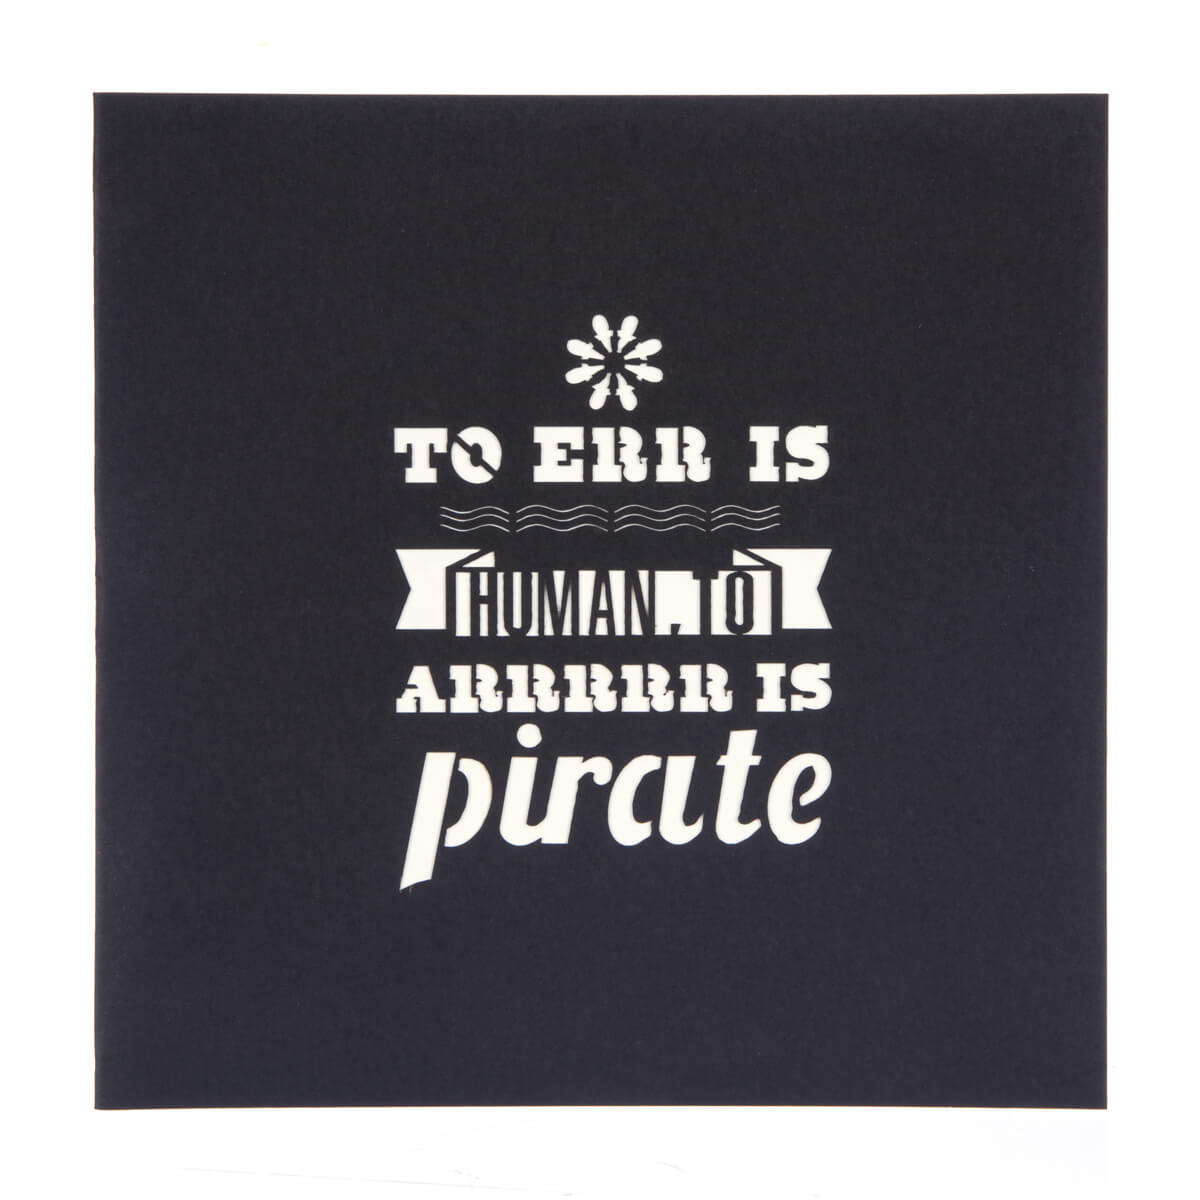 Pirate Ship Pop Up Card